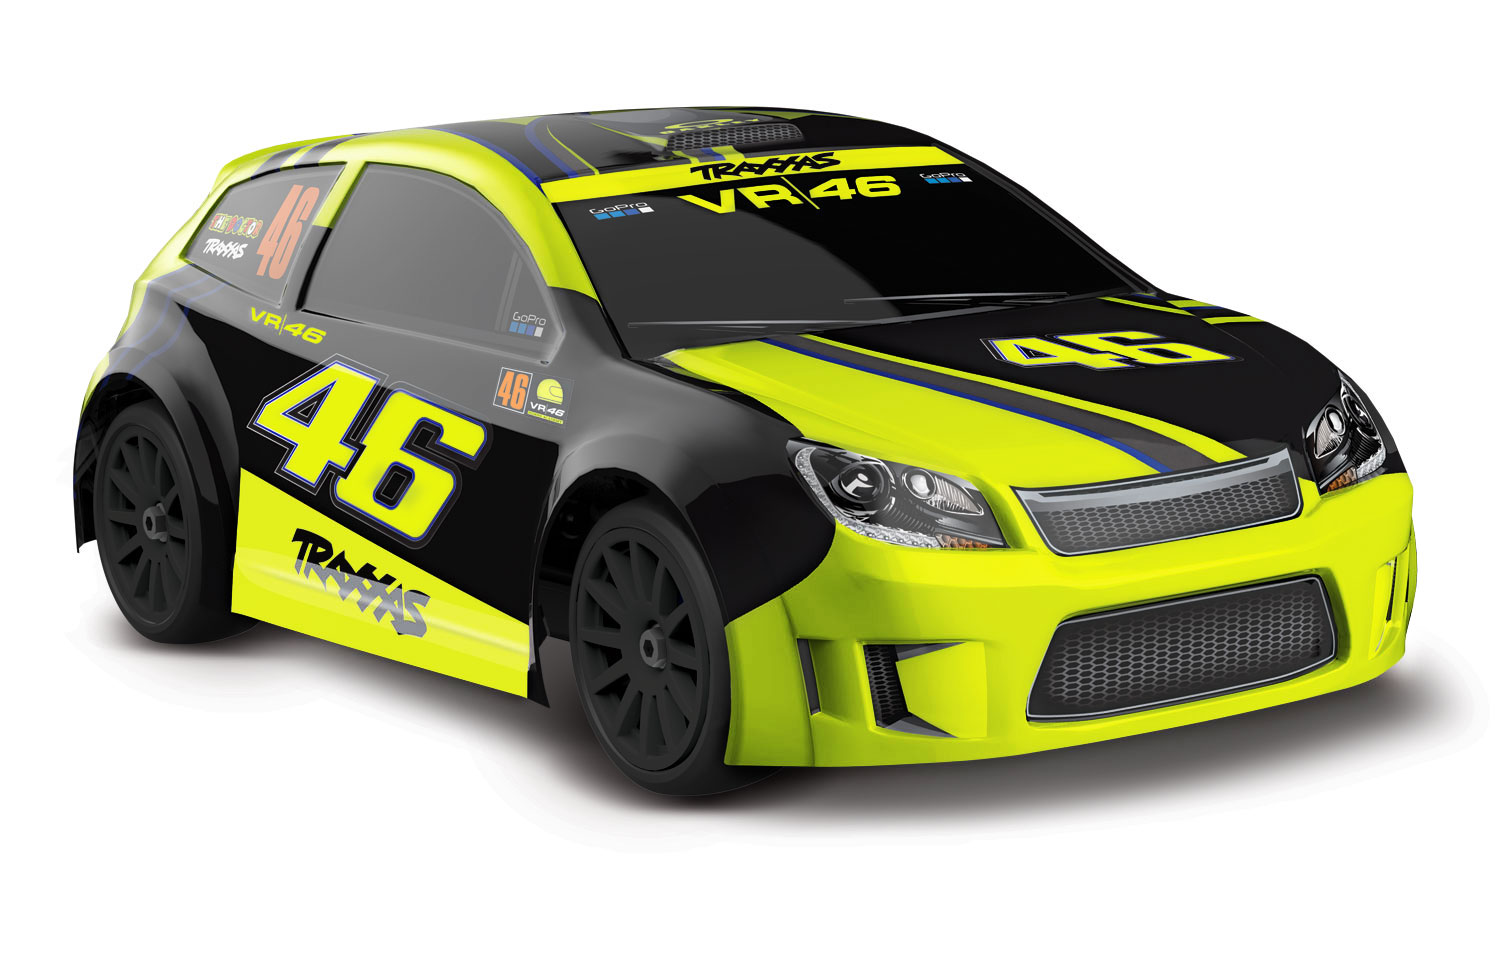 LaTrax VR46 Rallye